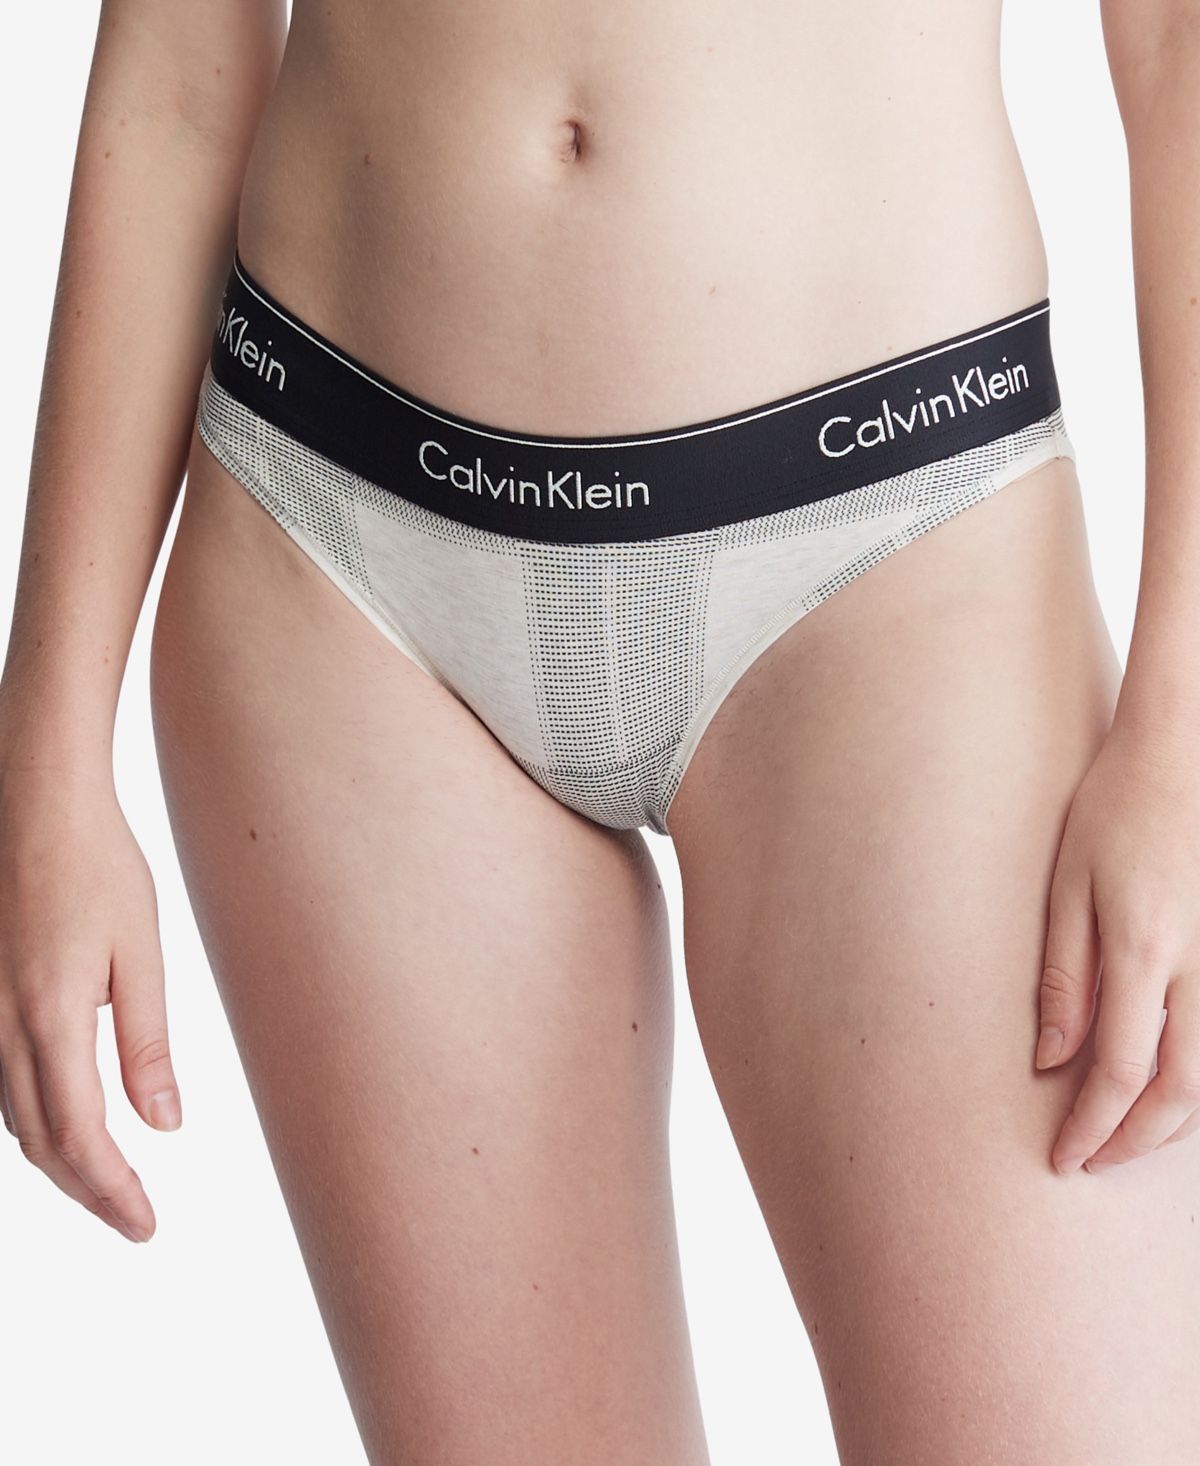 NWT! Calvin Klein Women's Modern Cotton Bikini Underwear - Plaid Oatmeal